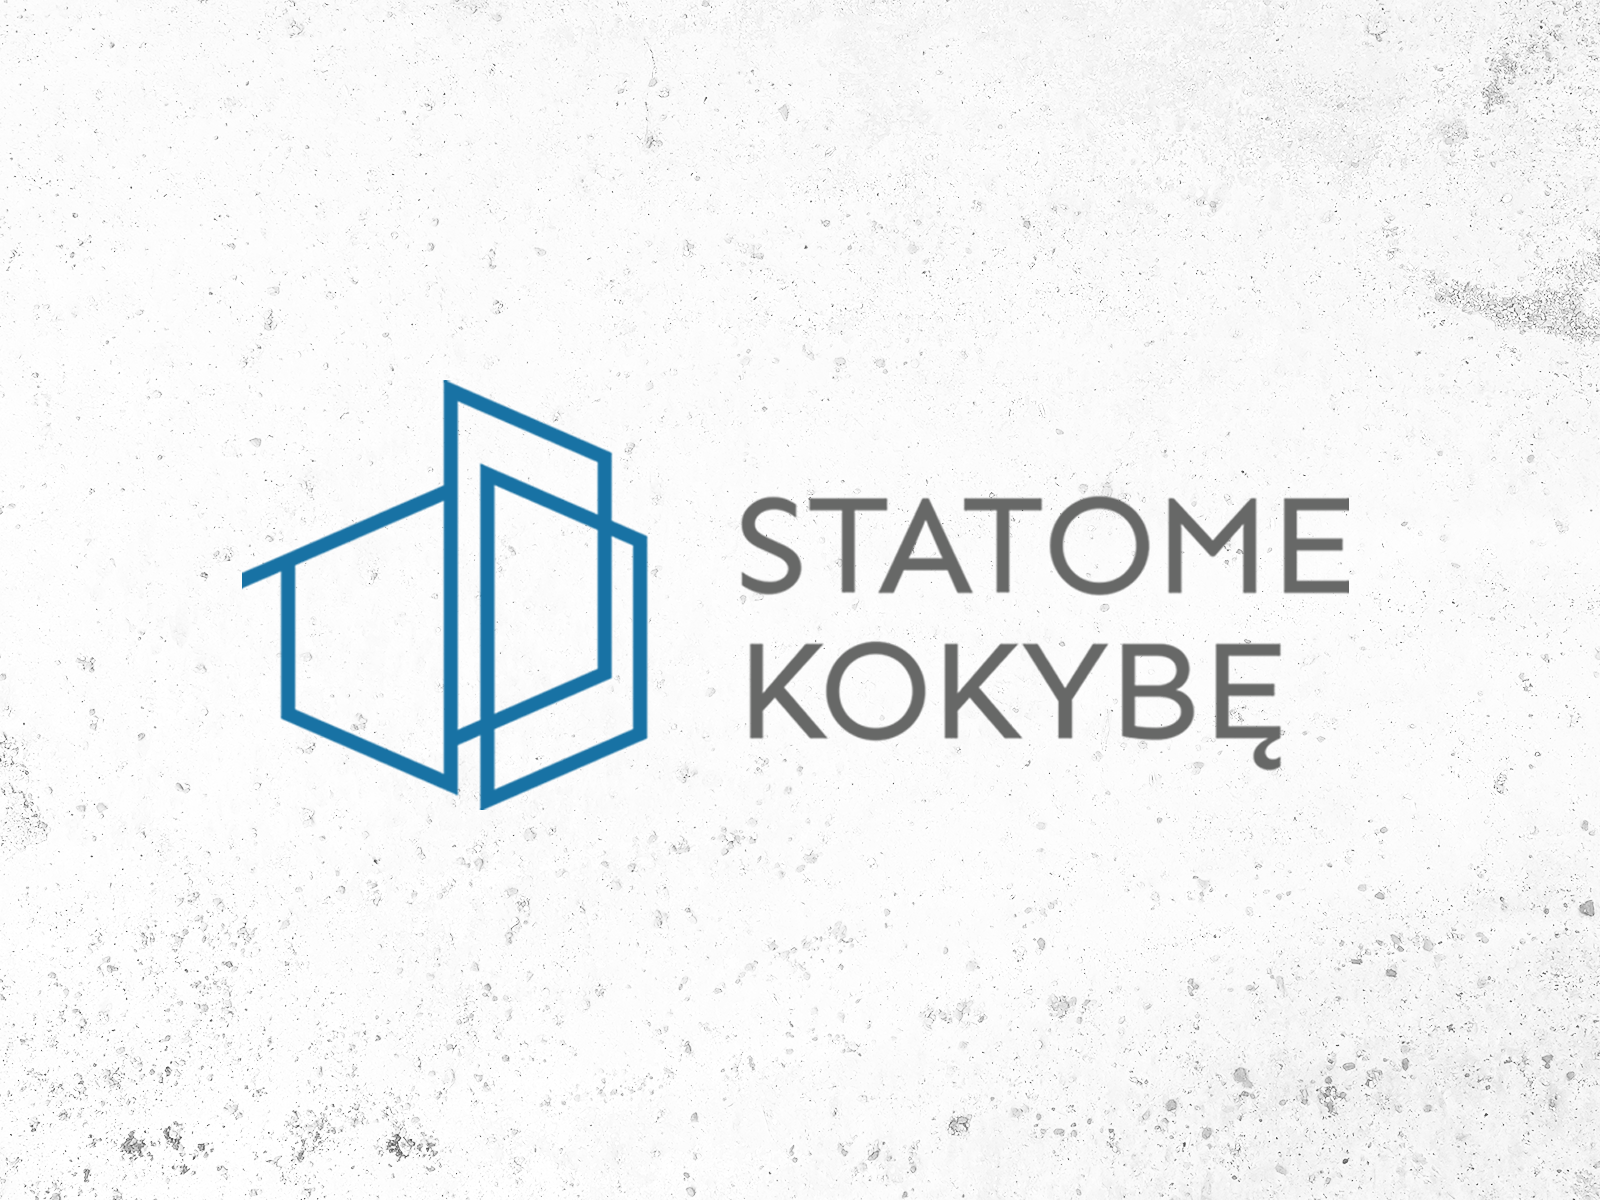 Statome Kokybe Logo And Branding By Raminta Drimeikytė On Dribbble